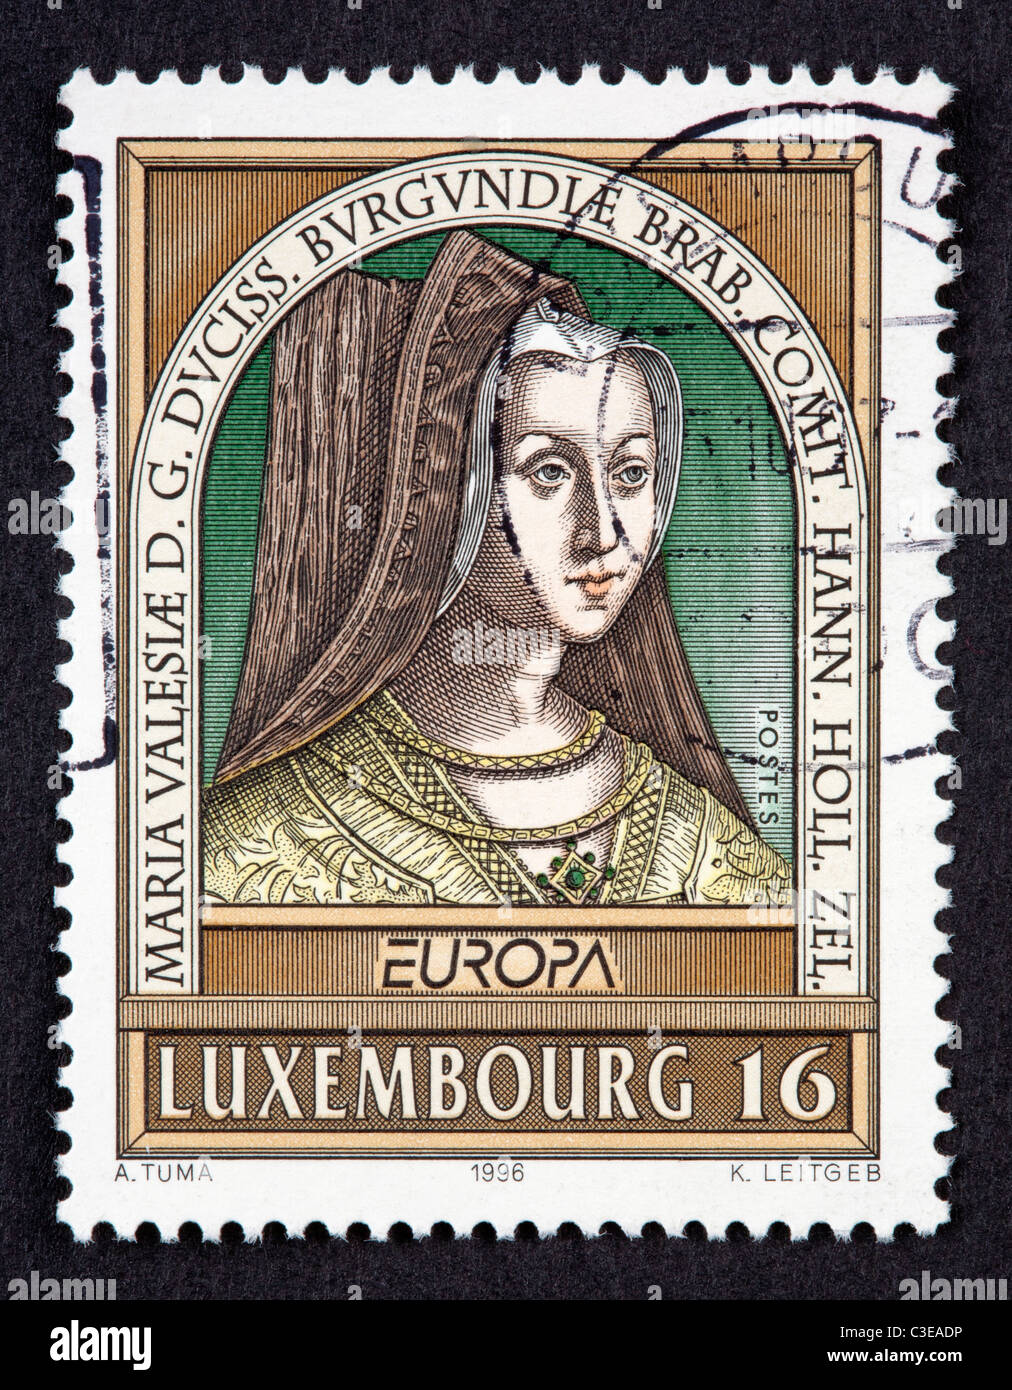 Luxembourgish postage stamp Stock Photo